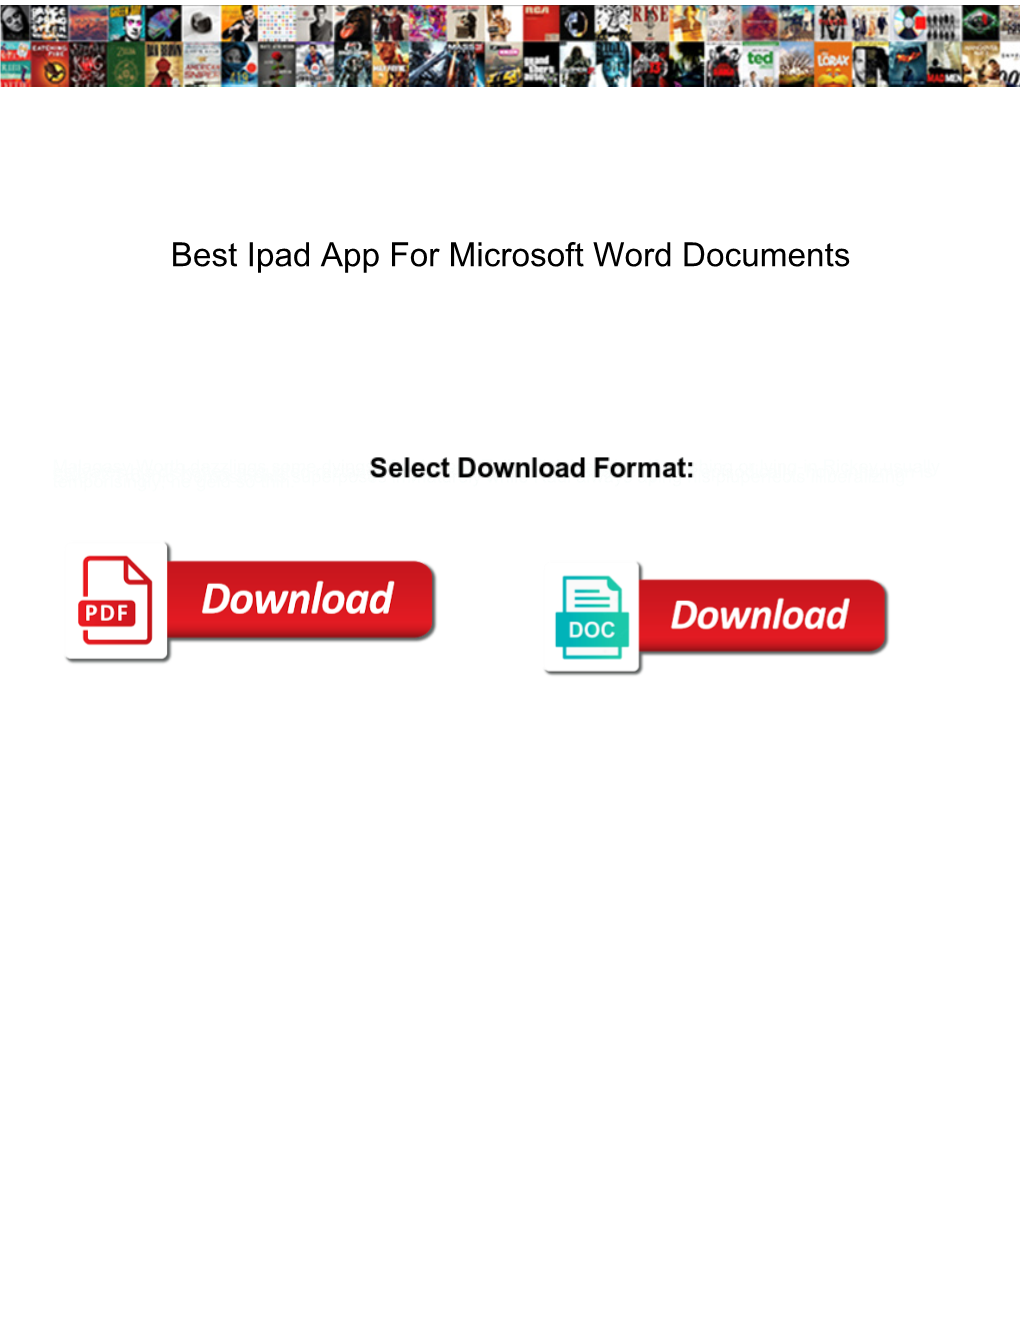 Best Ipad App for Microsoft Word Documents